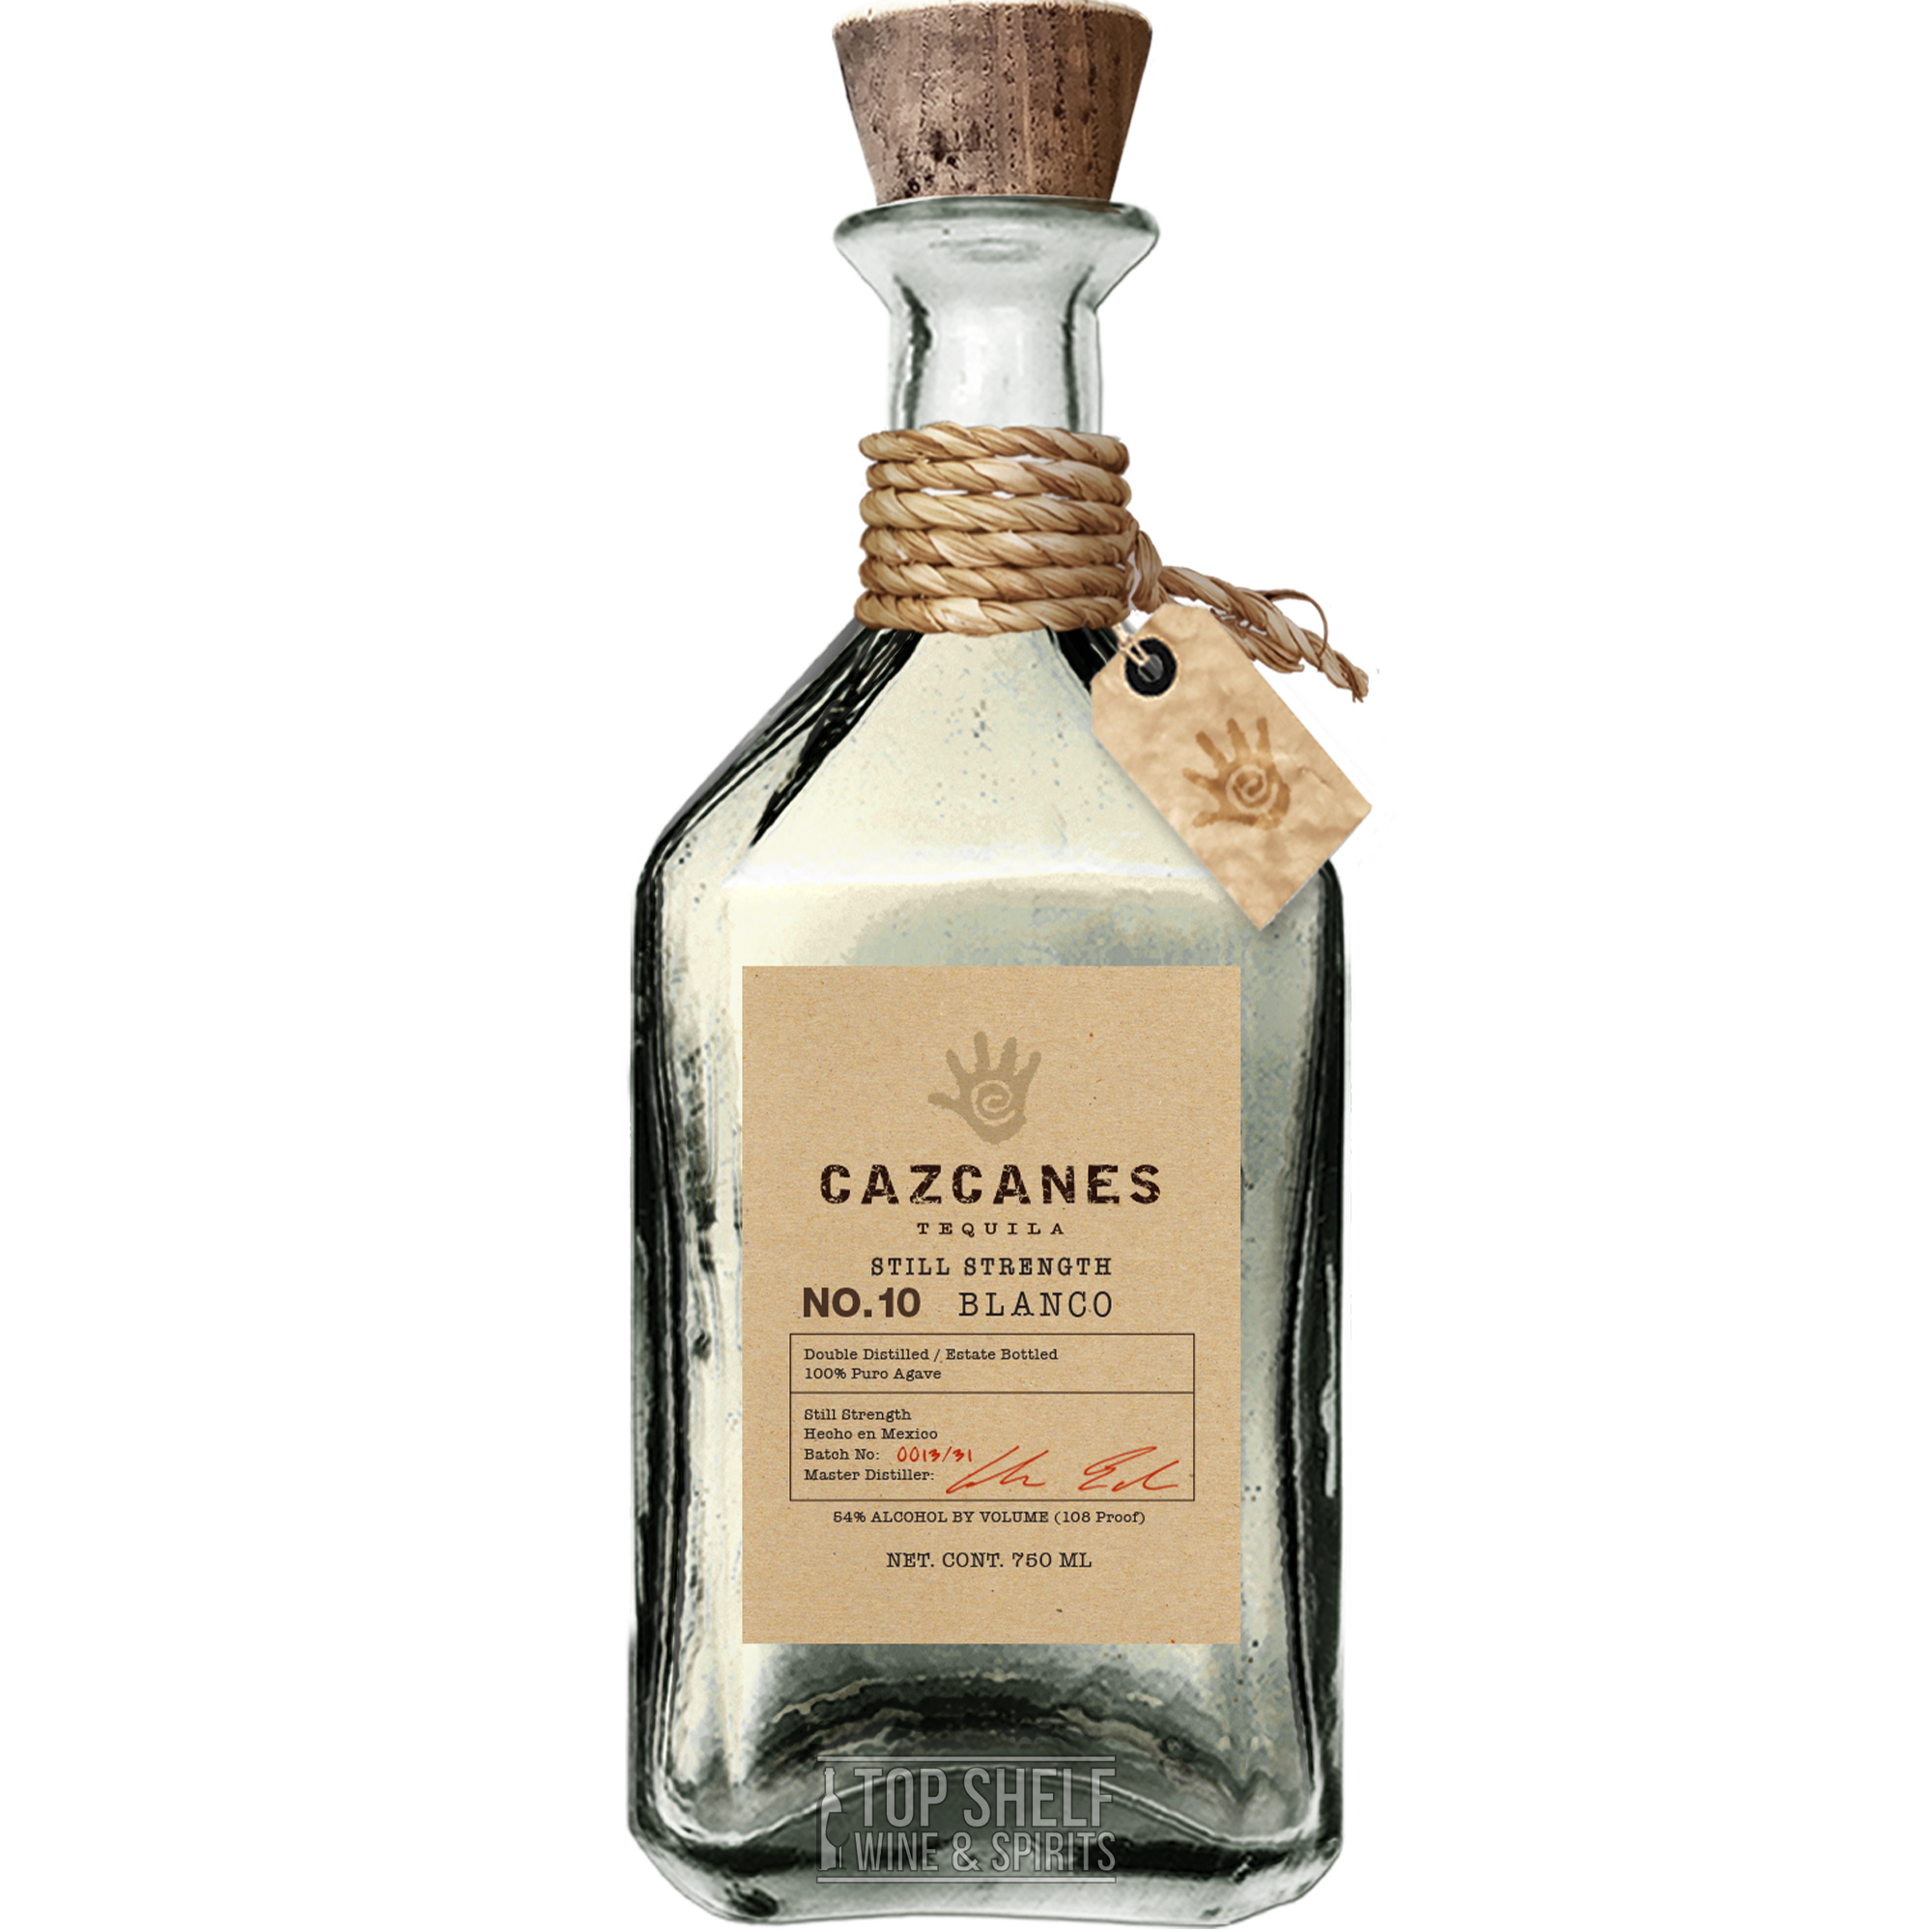 Cazcanes No.10 Blanco Still Strength Tequila